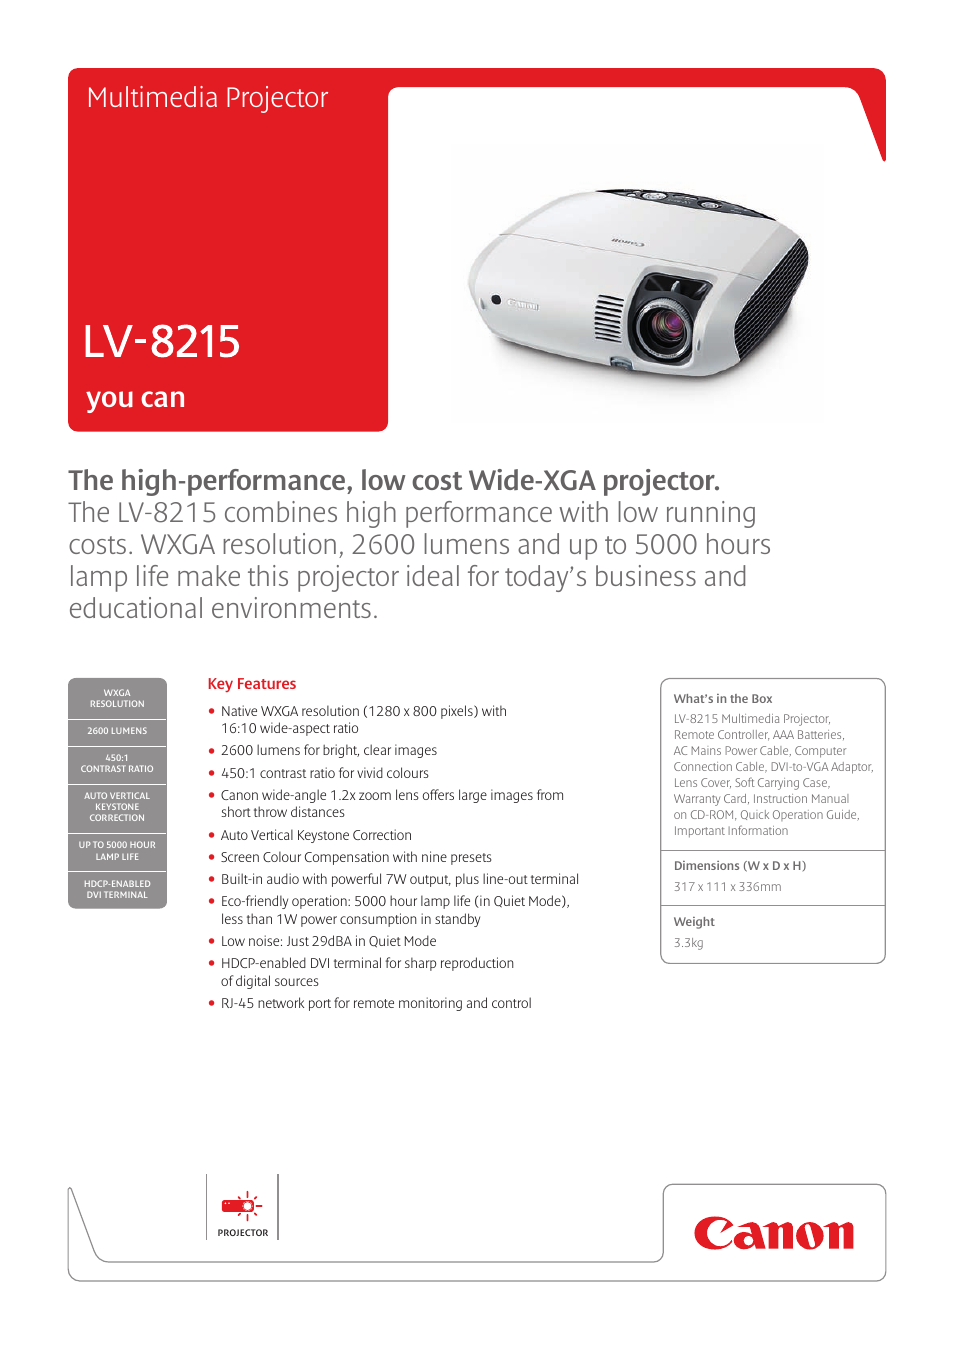 Multimedia Projector LV-8215